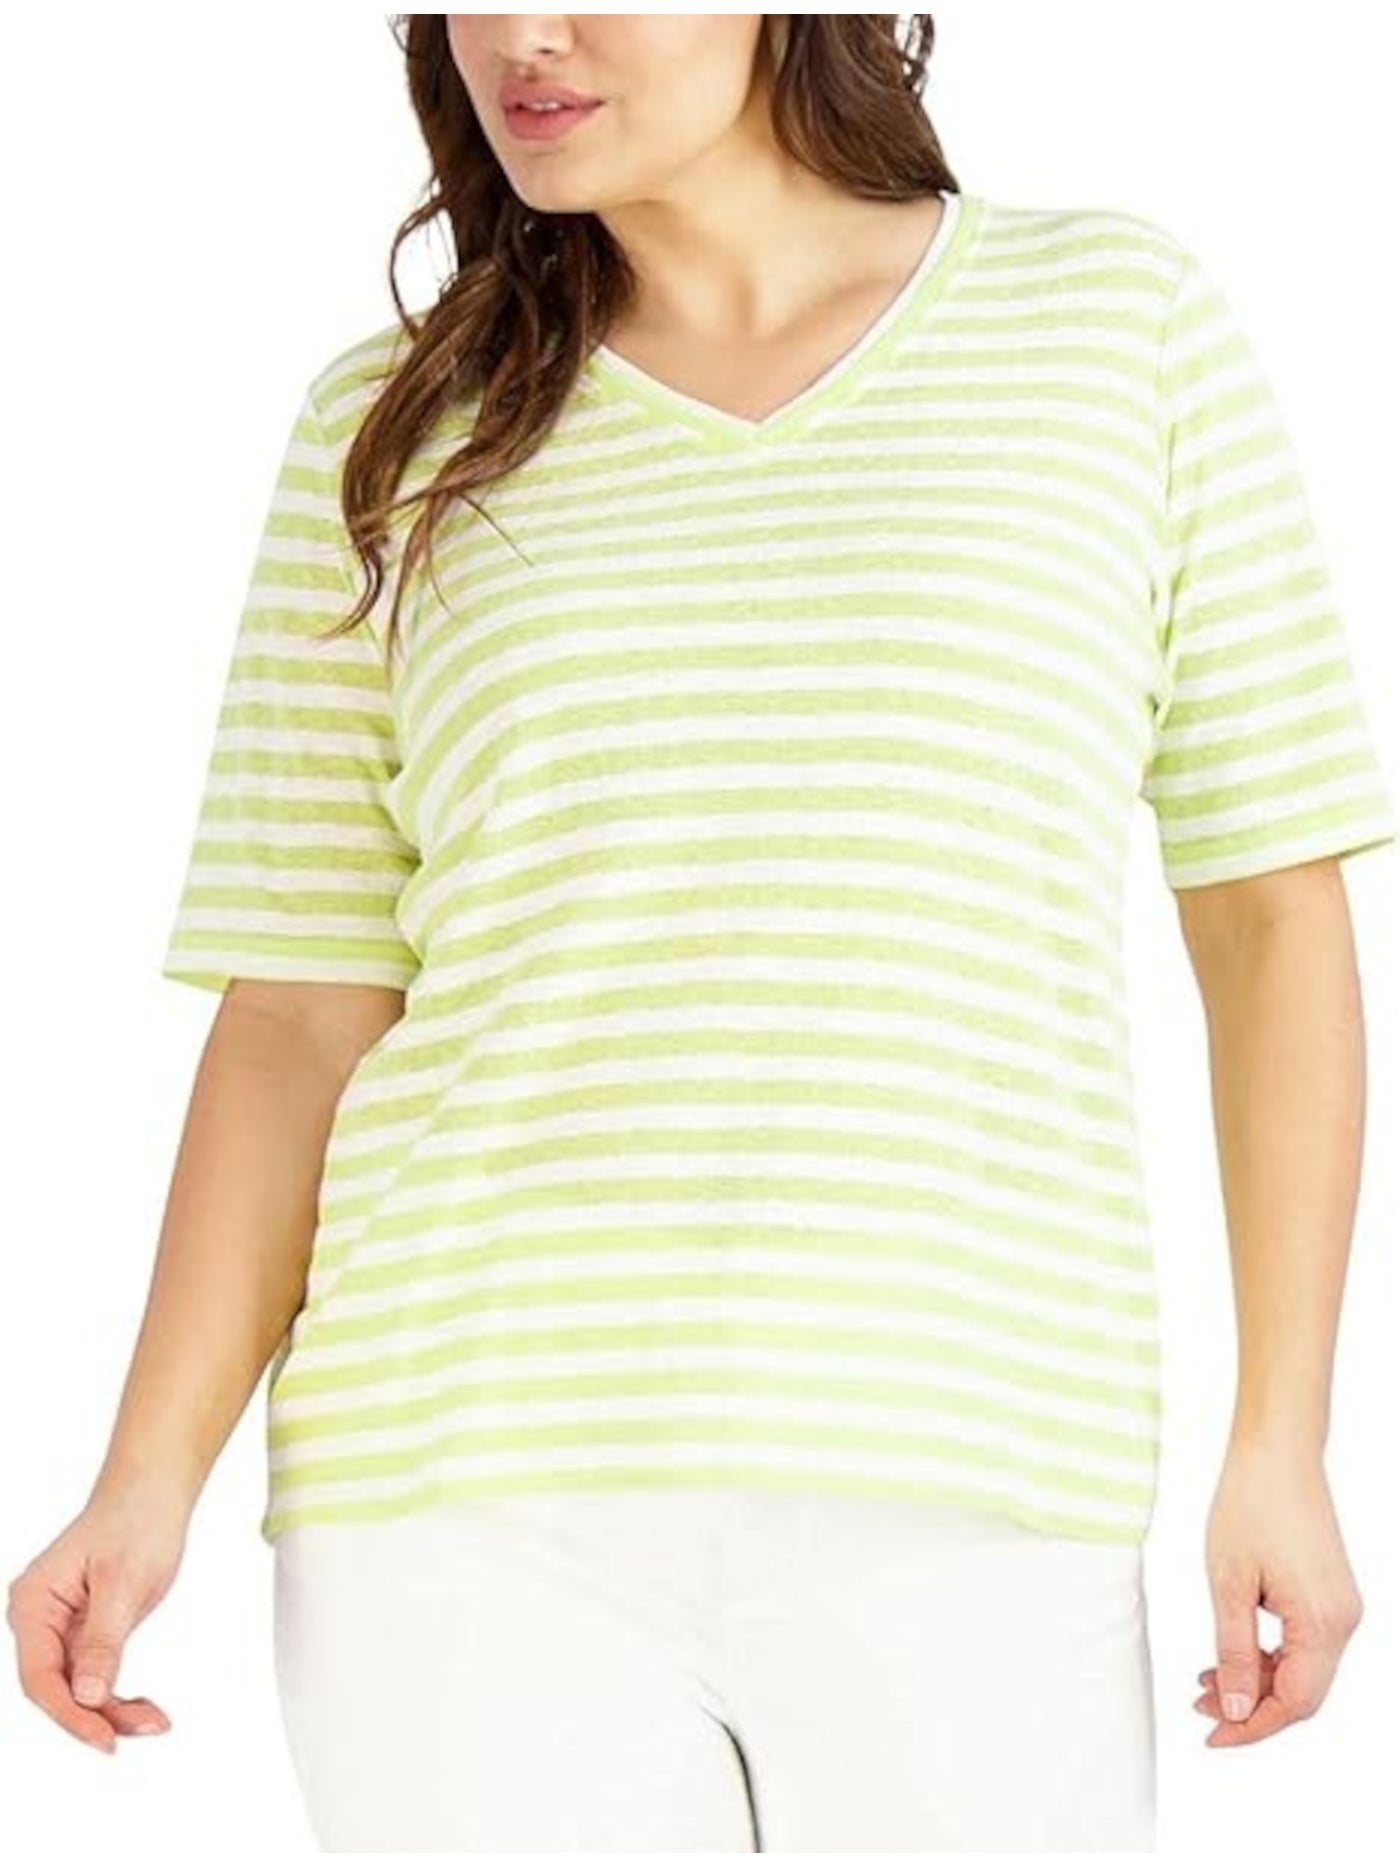 JONES NEW YORK Womens Green Sheer Textured Unlined Step Hem Striped Elbow Sleeve V Neck T-Shirt XS